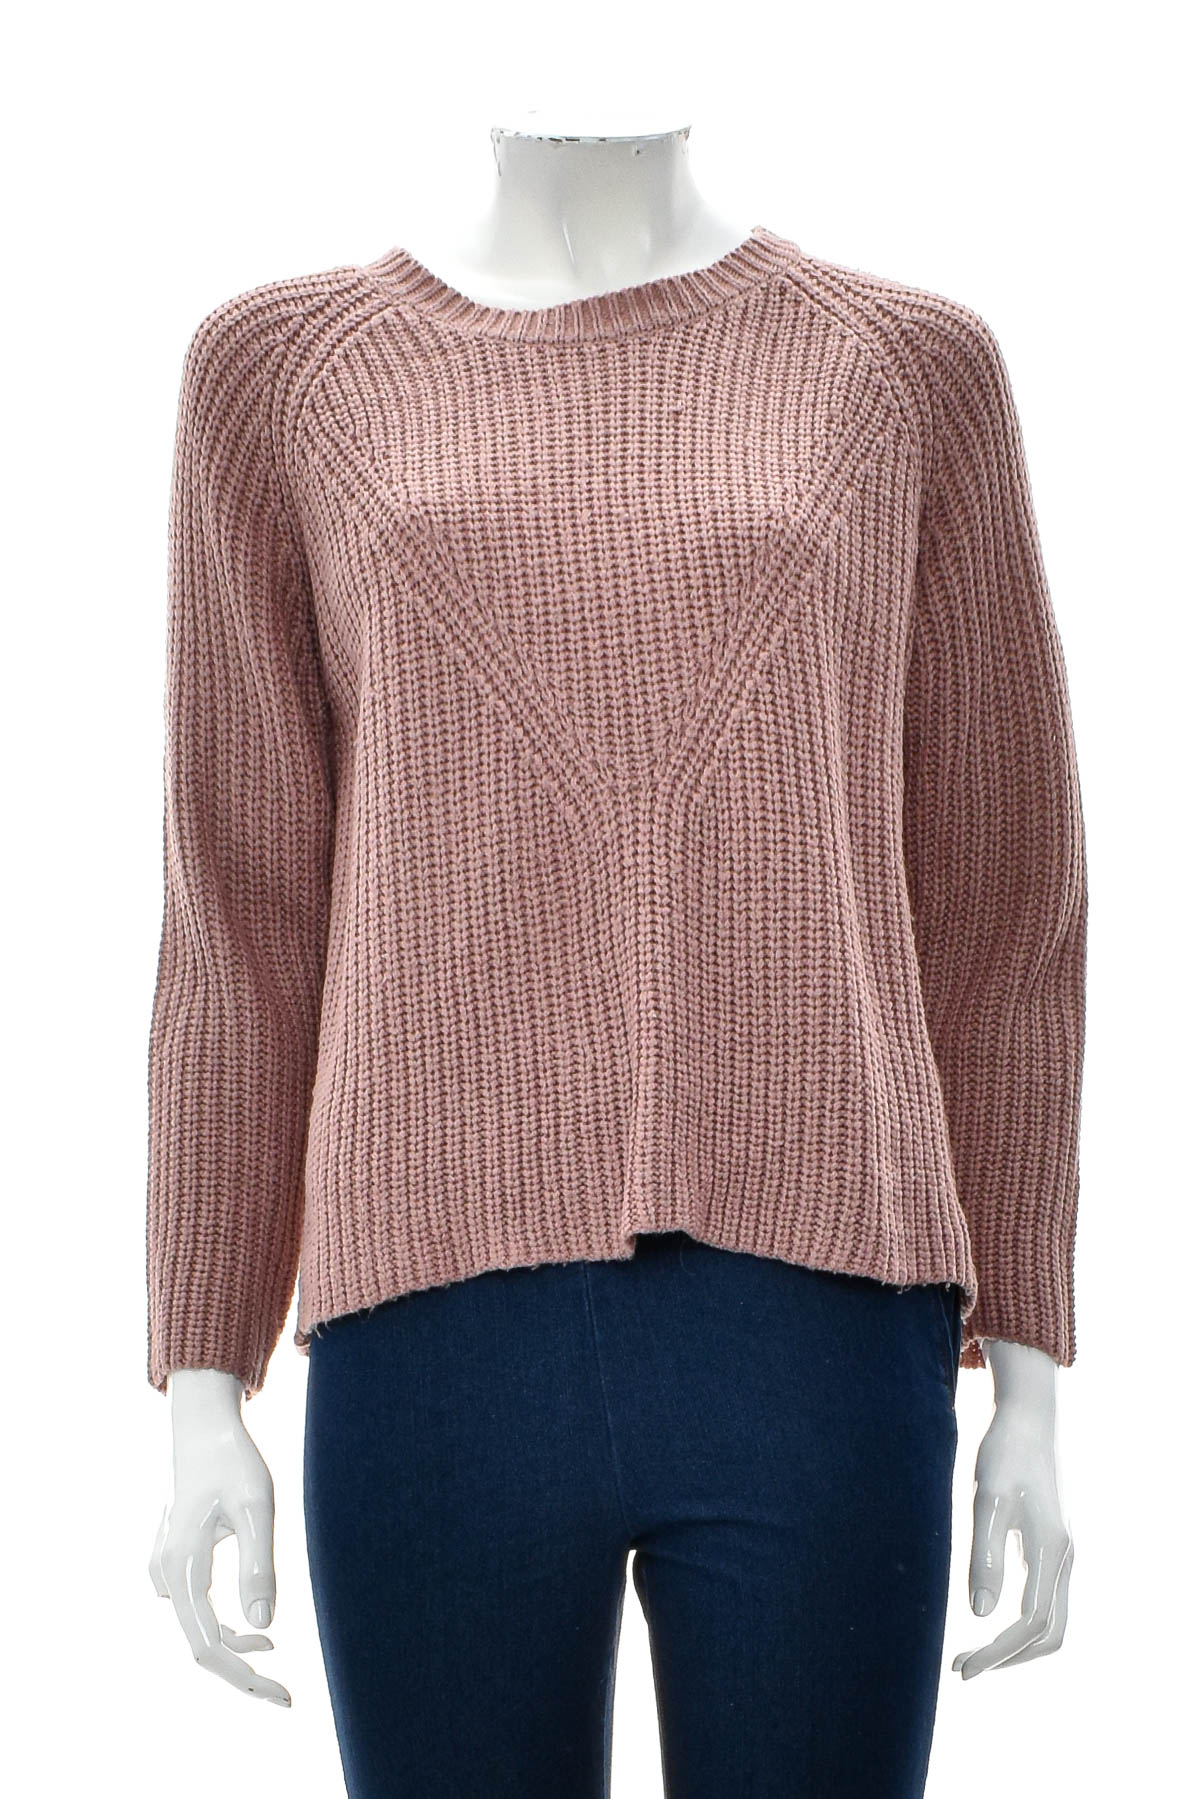 Women's sweater - Jacqueline de Yong - 0